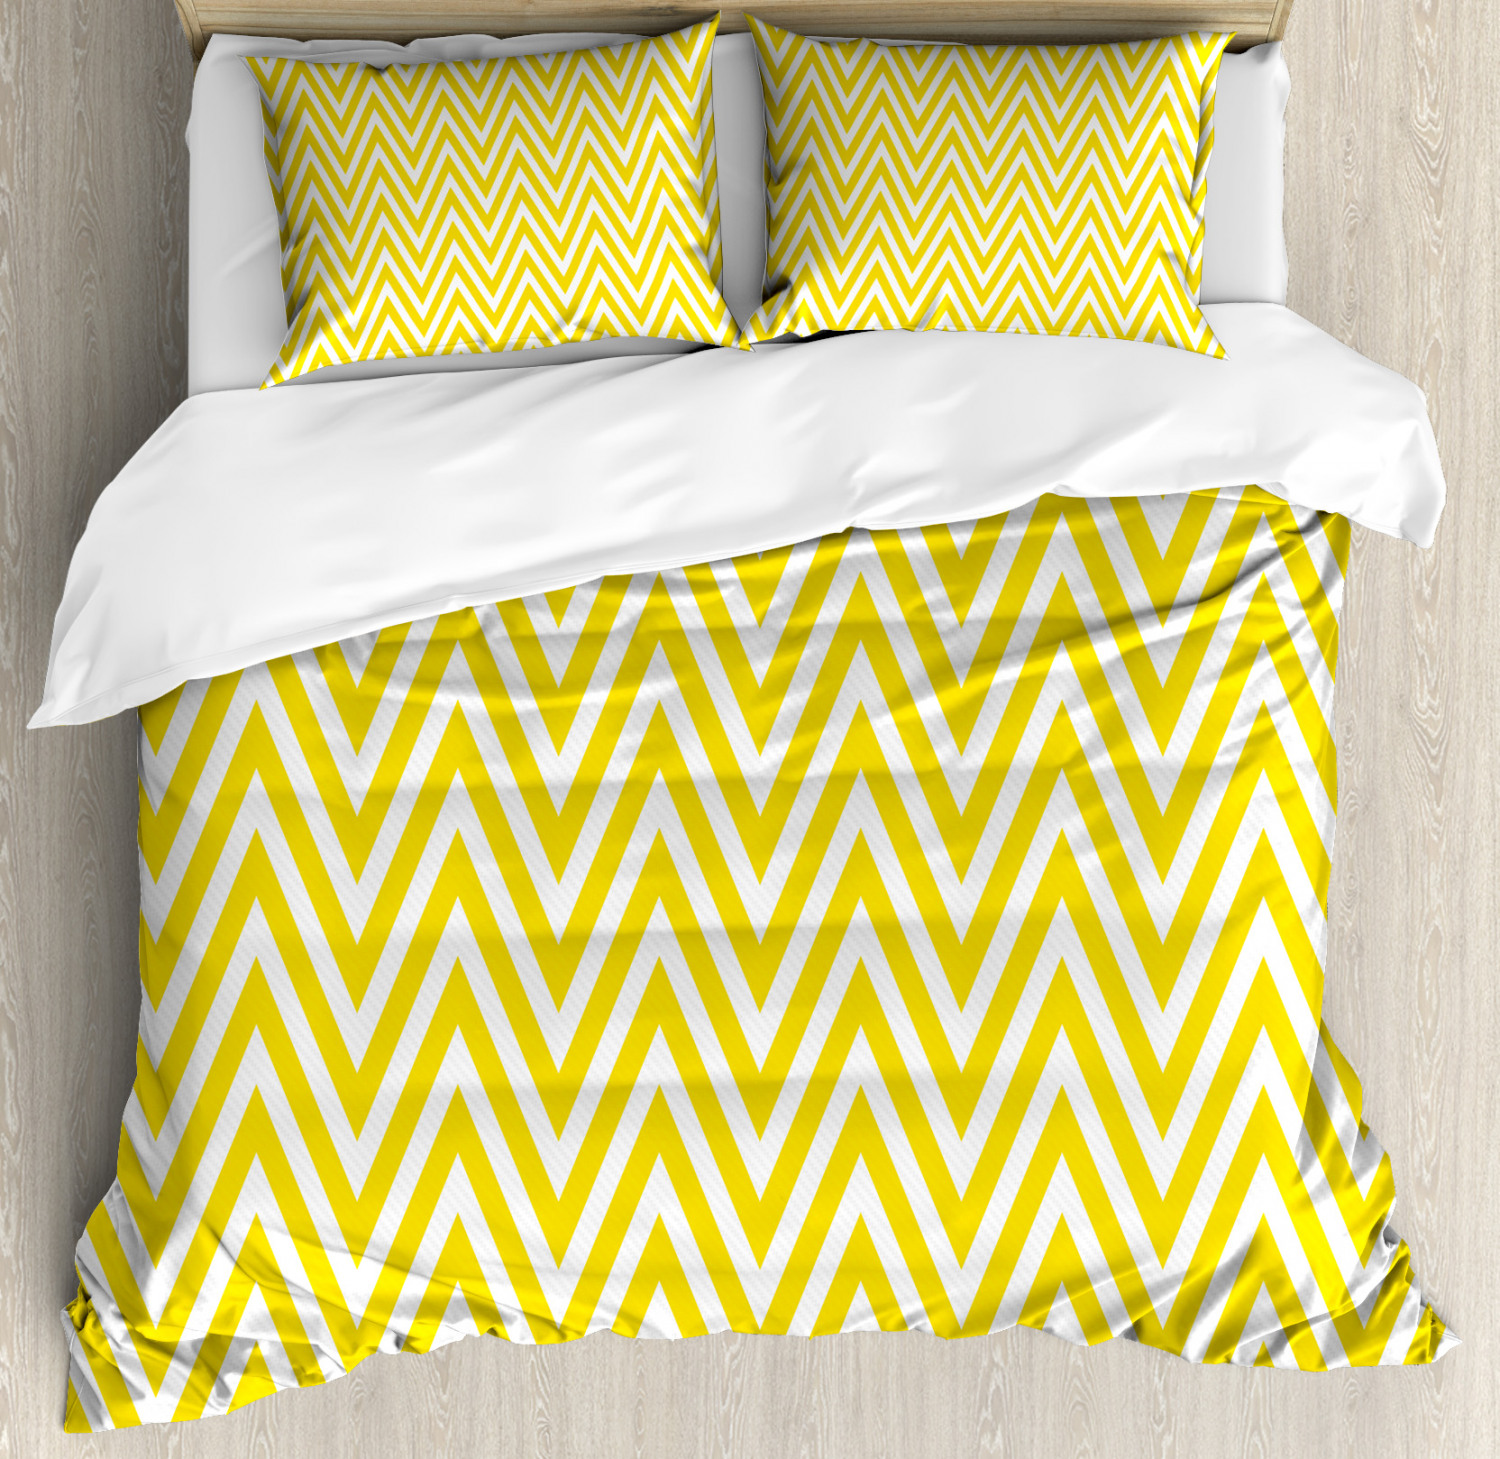 Yellow Chevron Duvet Cover Set With Pillow Shams Modern Thin Line